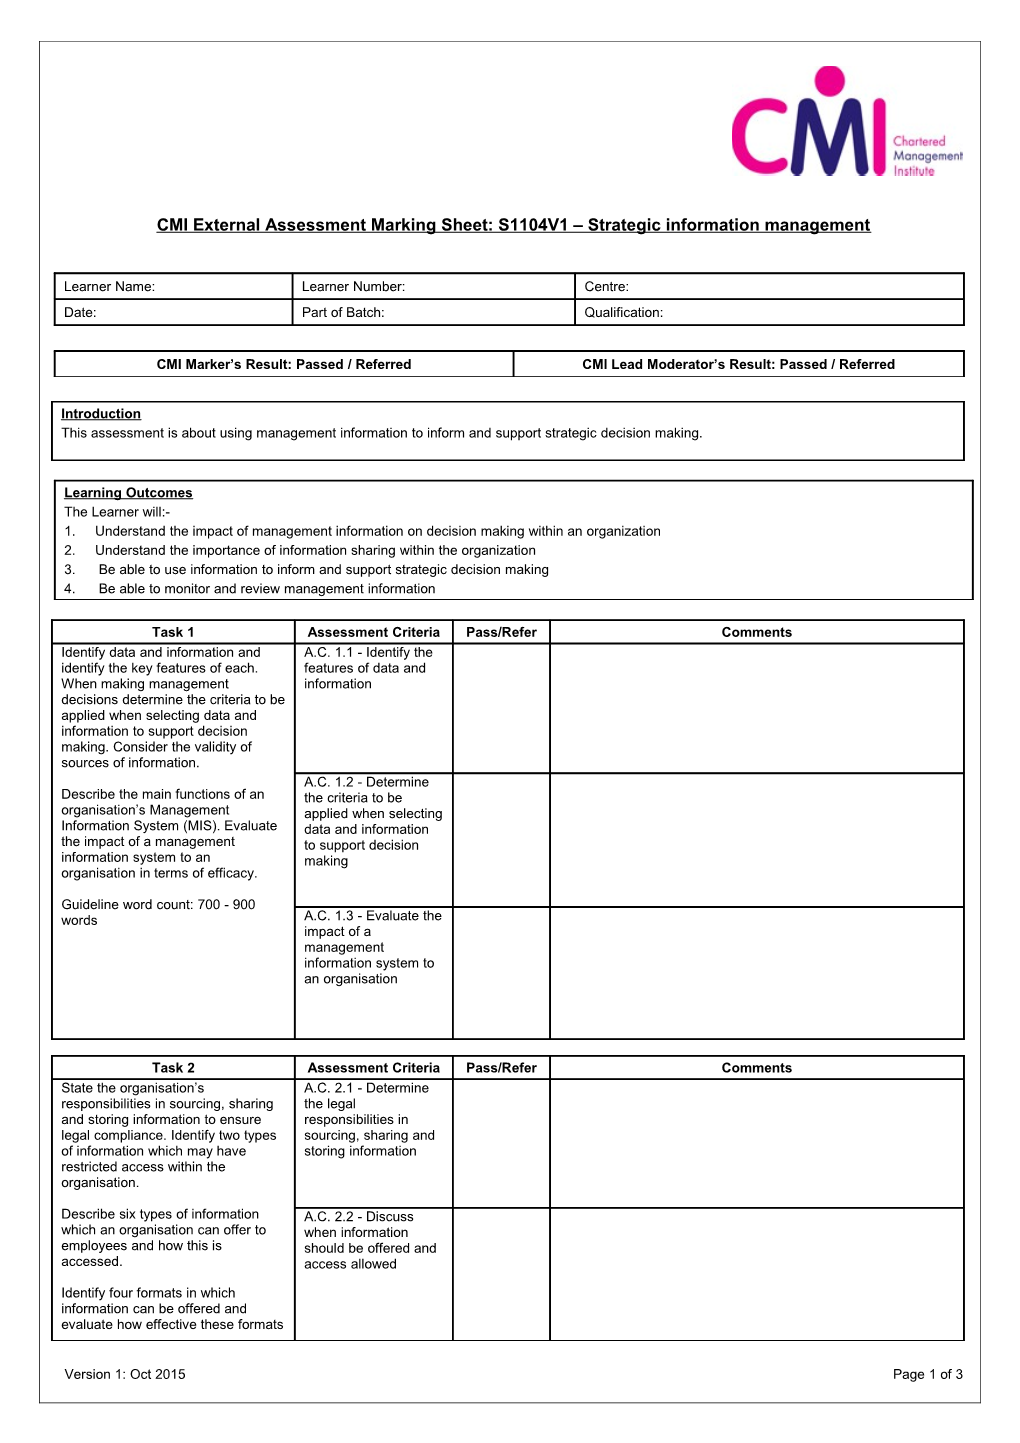 CMI External Assessment Marking Sheet:S1104V1 Strategic Information Management